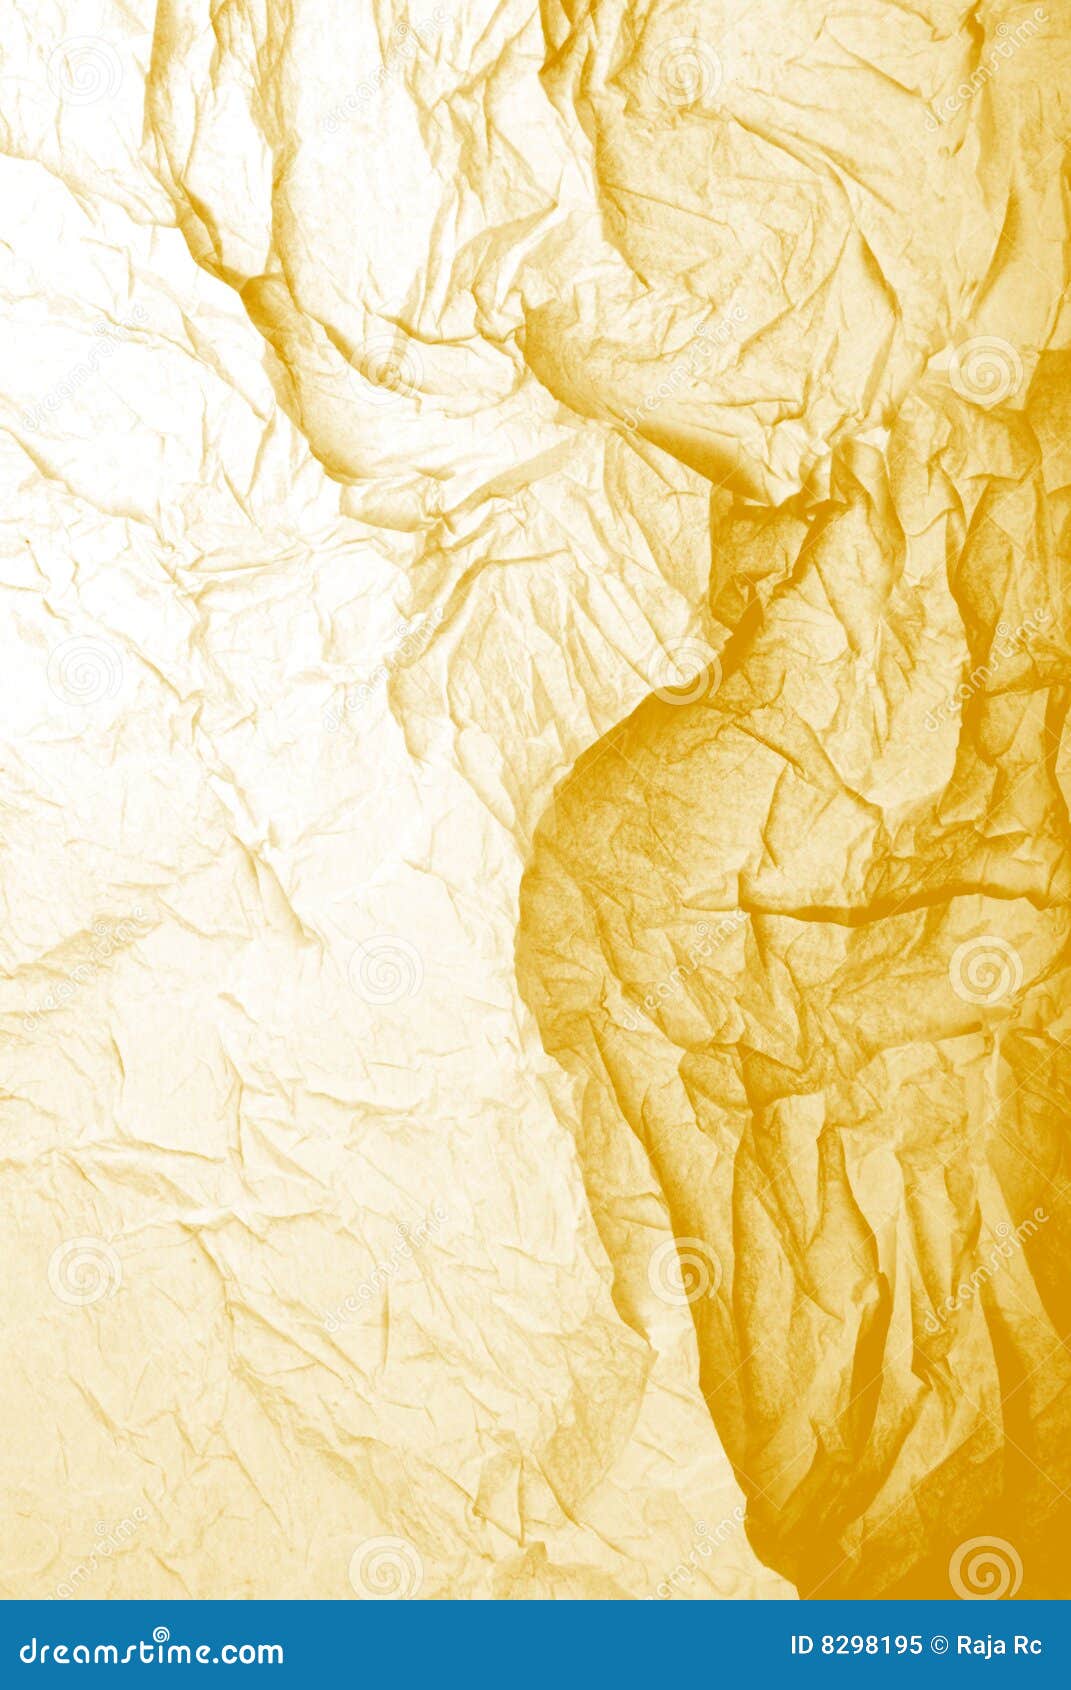 Orange Paper Texture Background Stock Image - Image of rough, fiber:  61786731